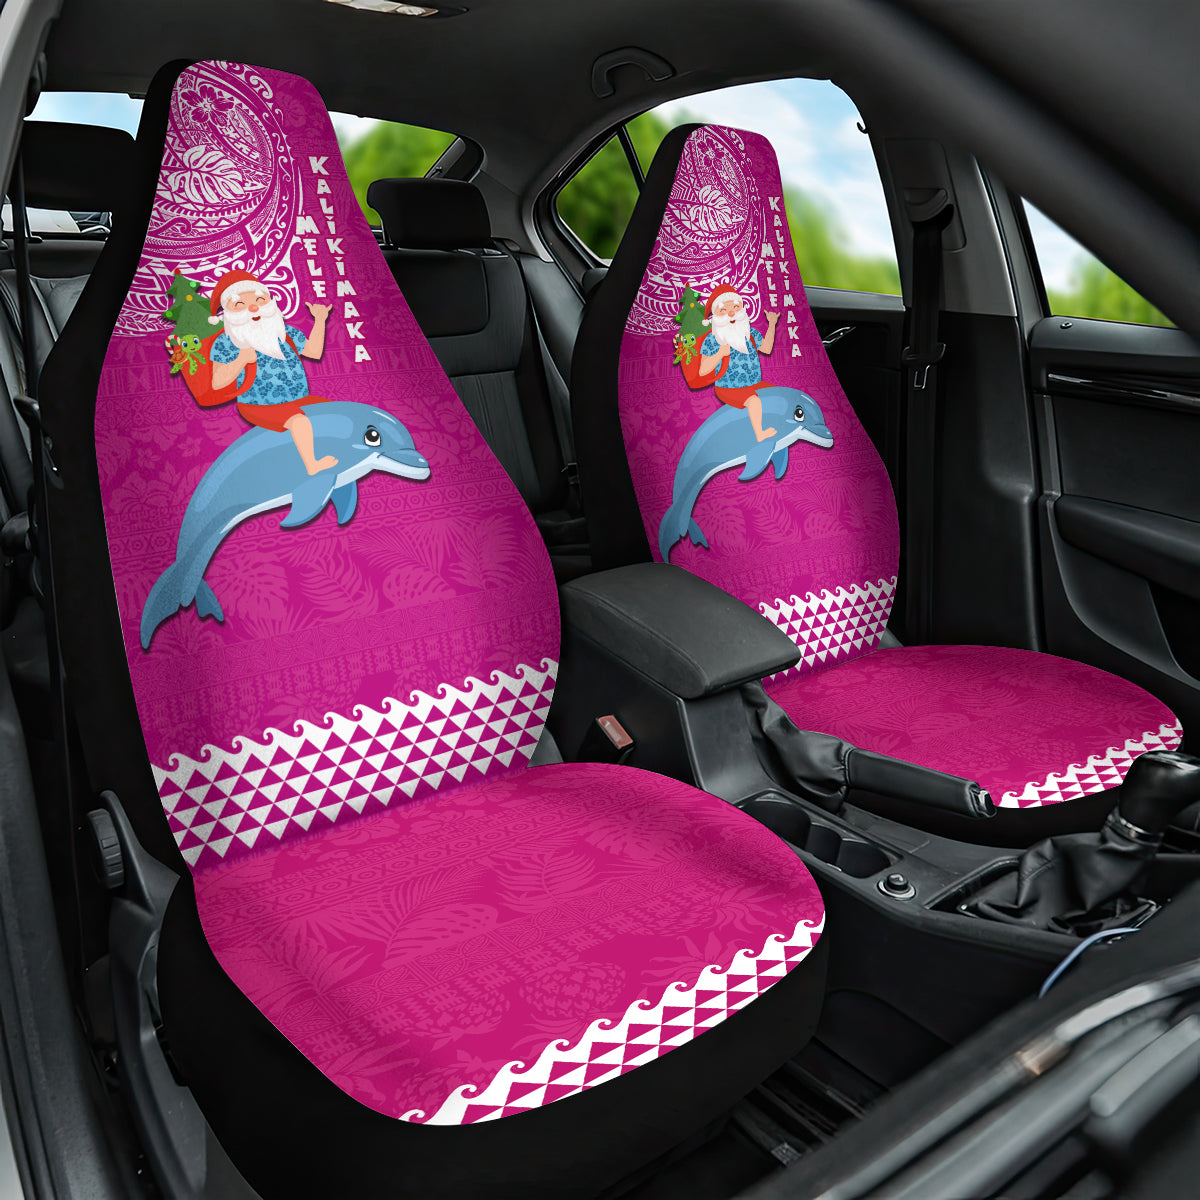 Hawaii Mele Kalikimaka Car Seat Cover Santa Riding The DolPhin Mix Kakau Pattern Pink Style LT03 One Size Pink - Polynesian Pride